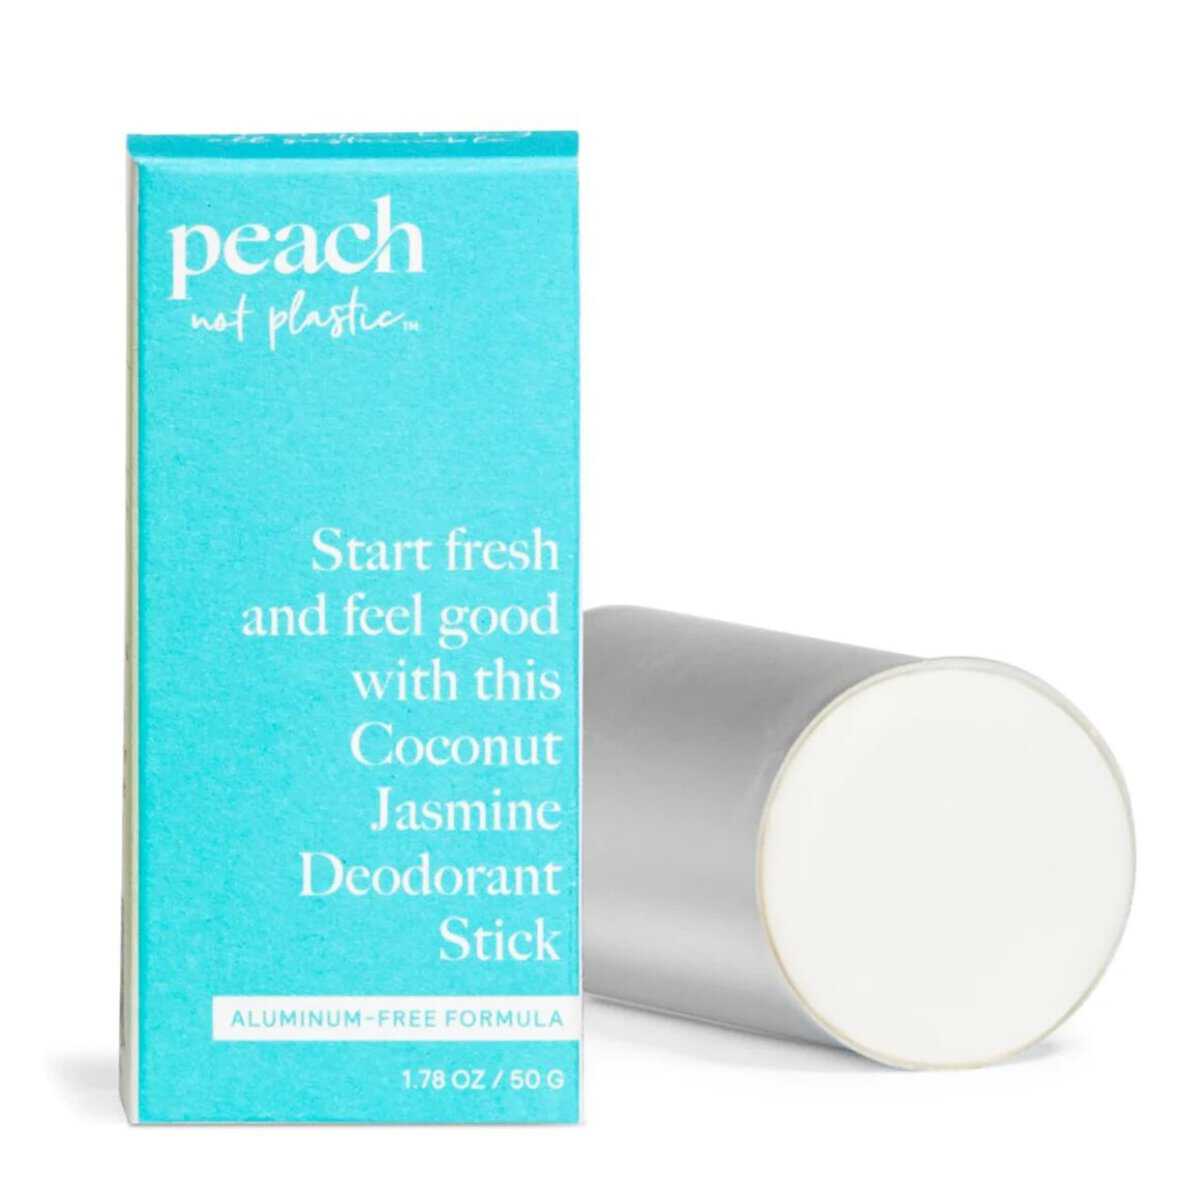 A tube of Peach Not Plastic brand deodorant. 